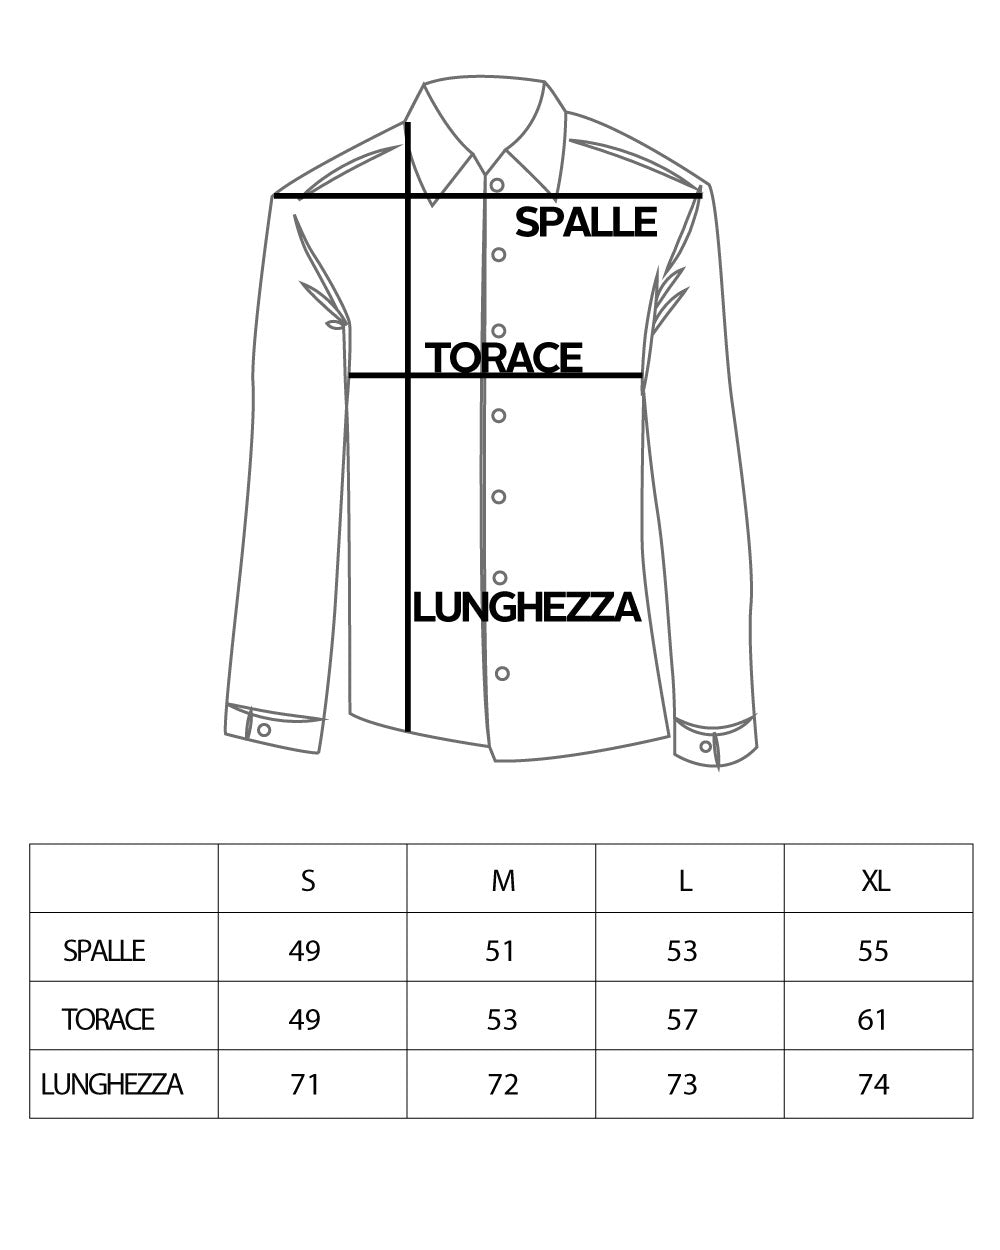 Men's Serafino Coat Shirt Short Sleeve Casual Linen Solid Color Green GIOSAL-CC1159A